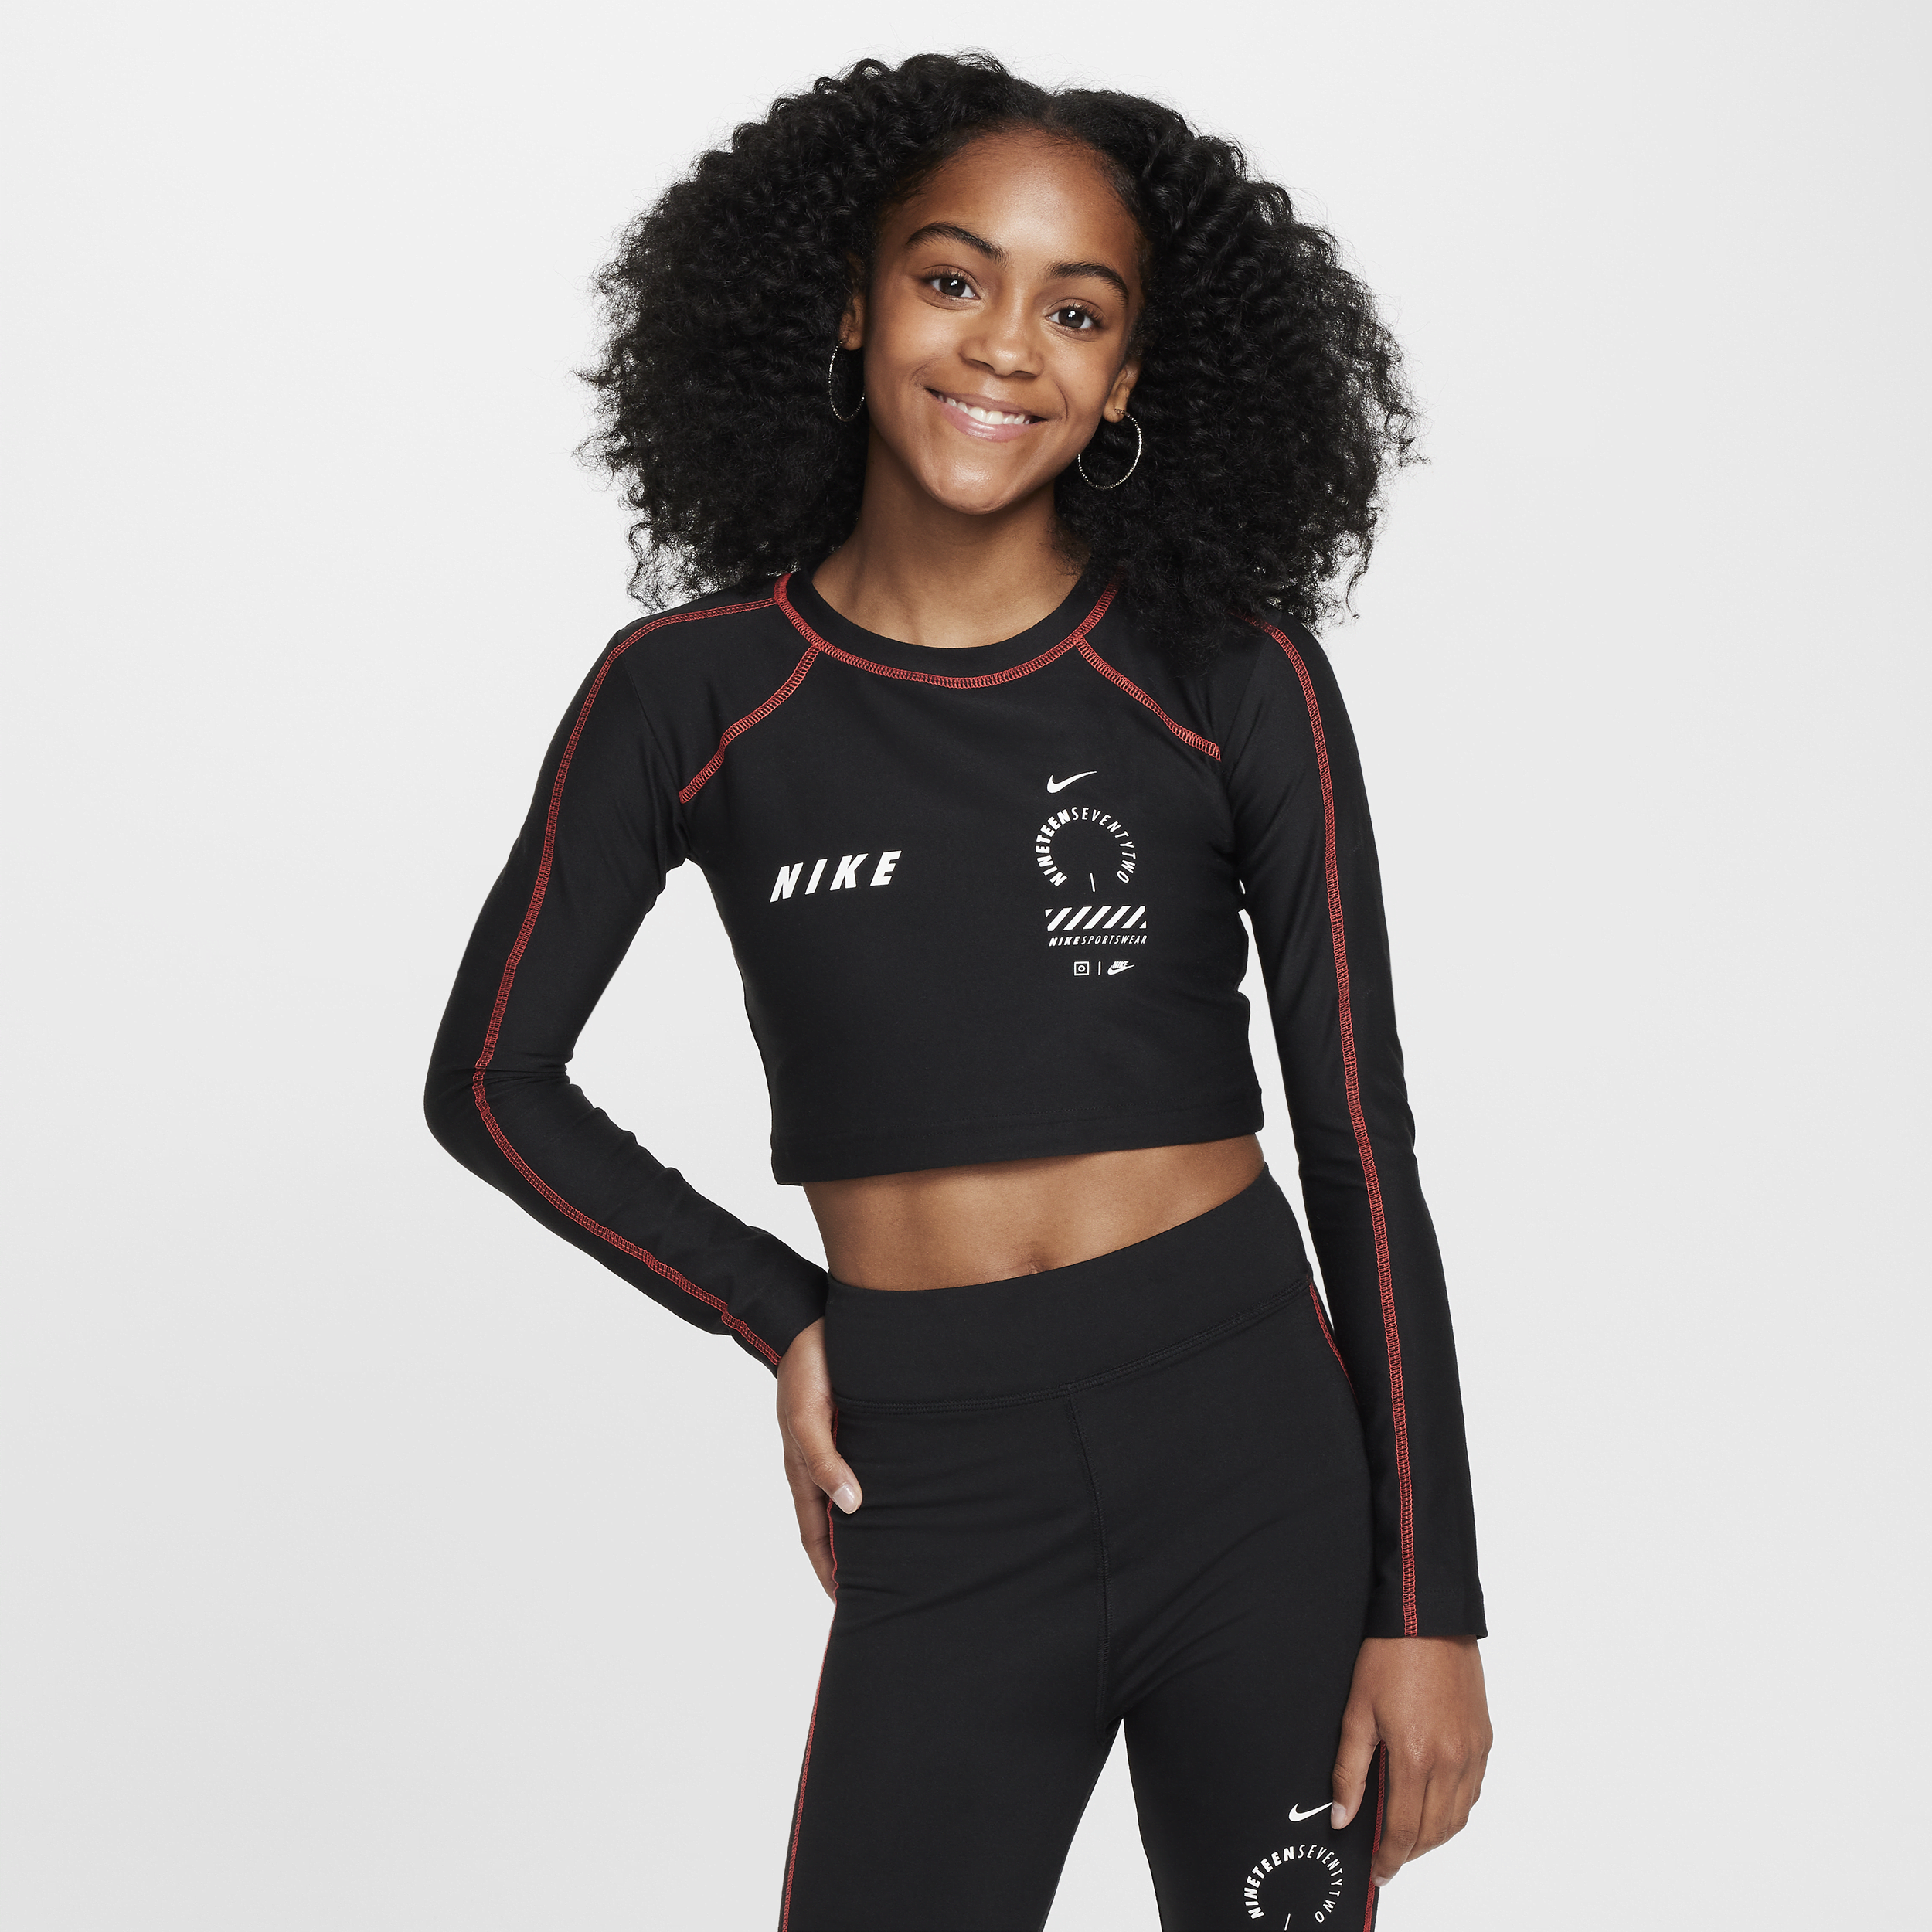 Nike Sportswear croptop met lange mouwen voor Zwart